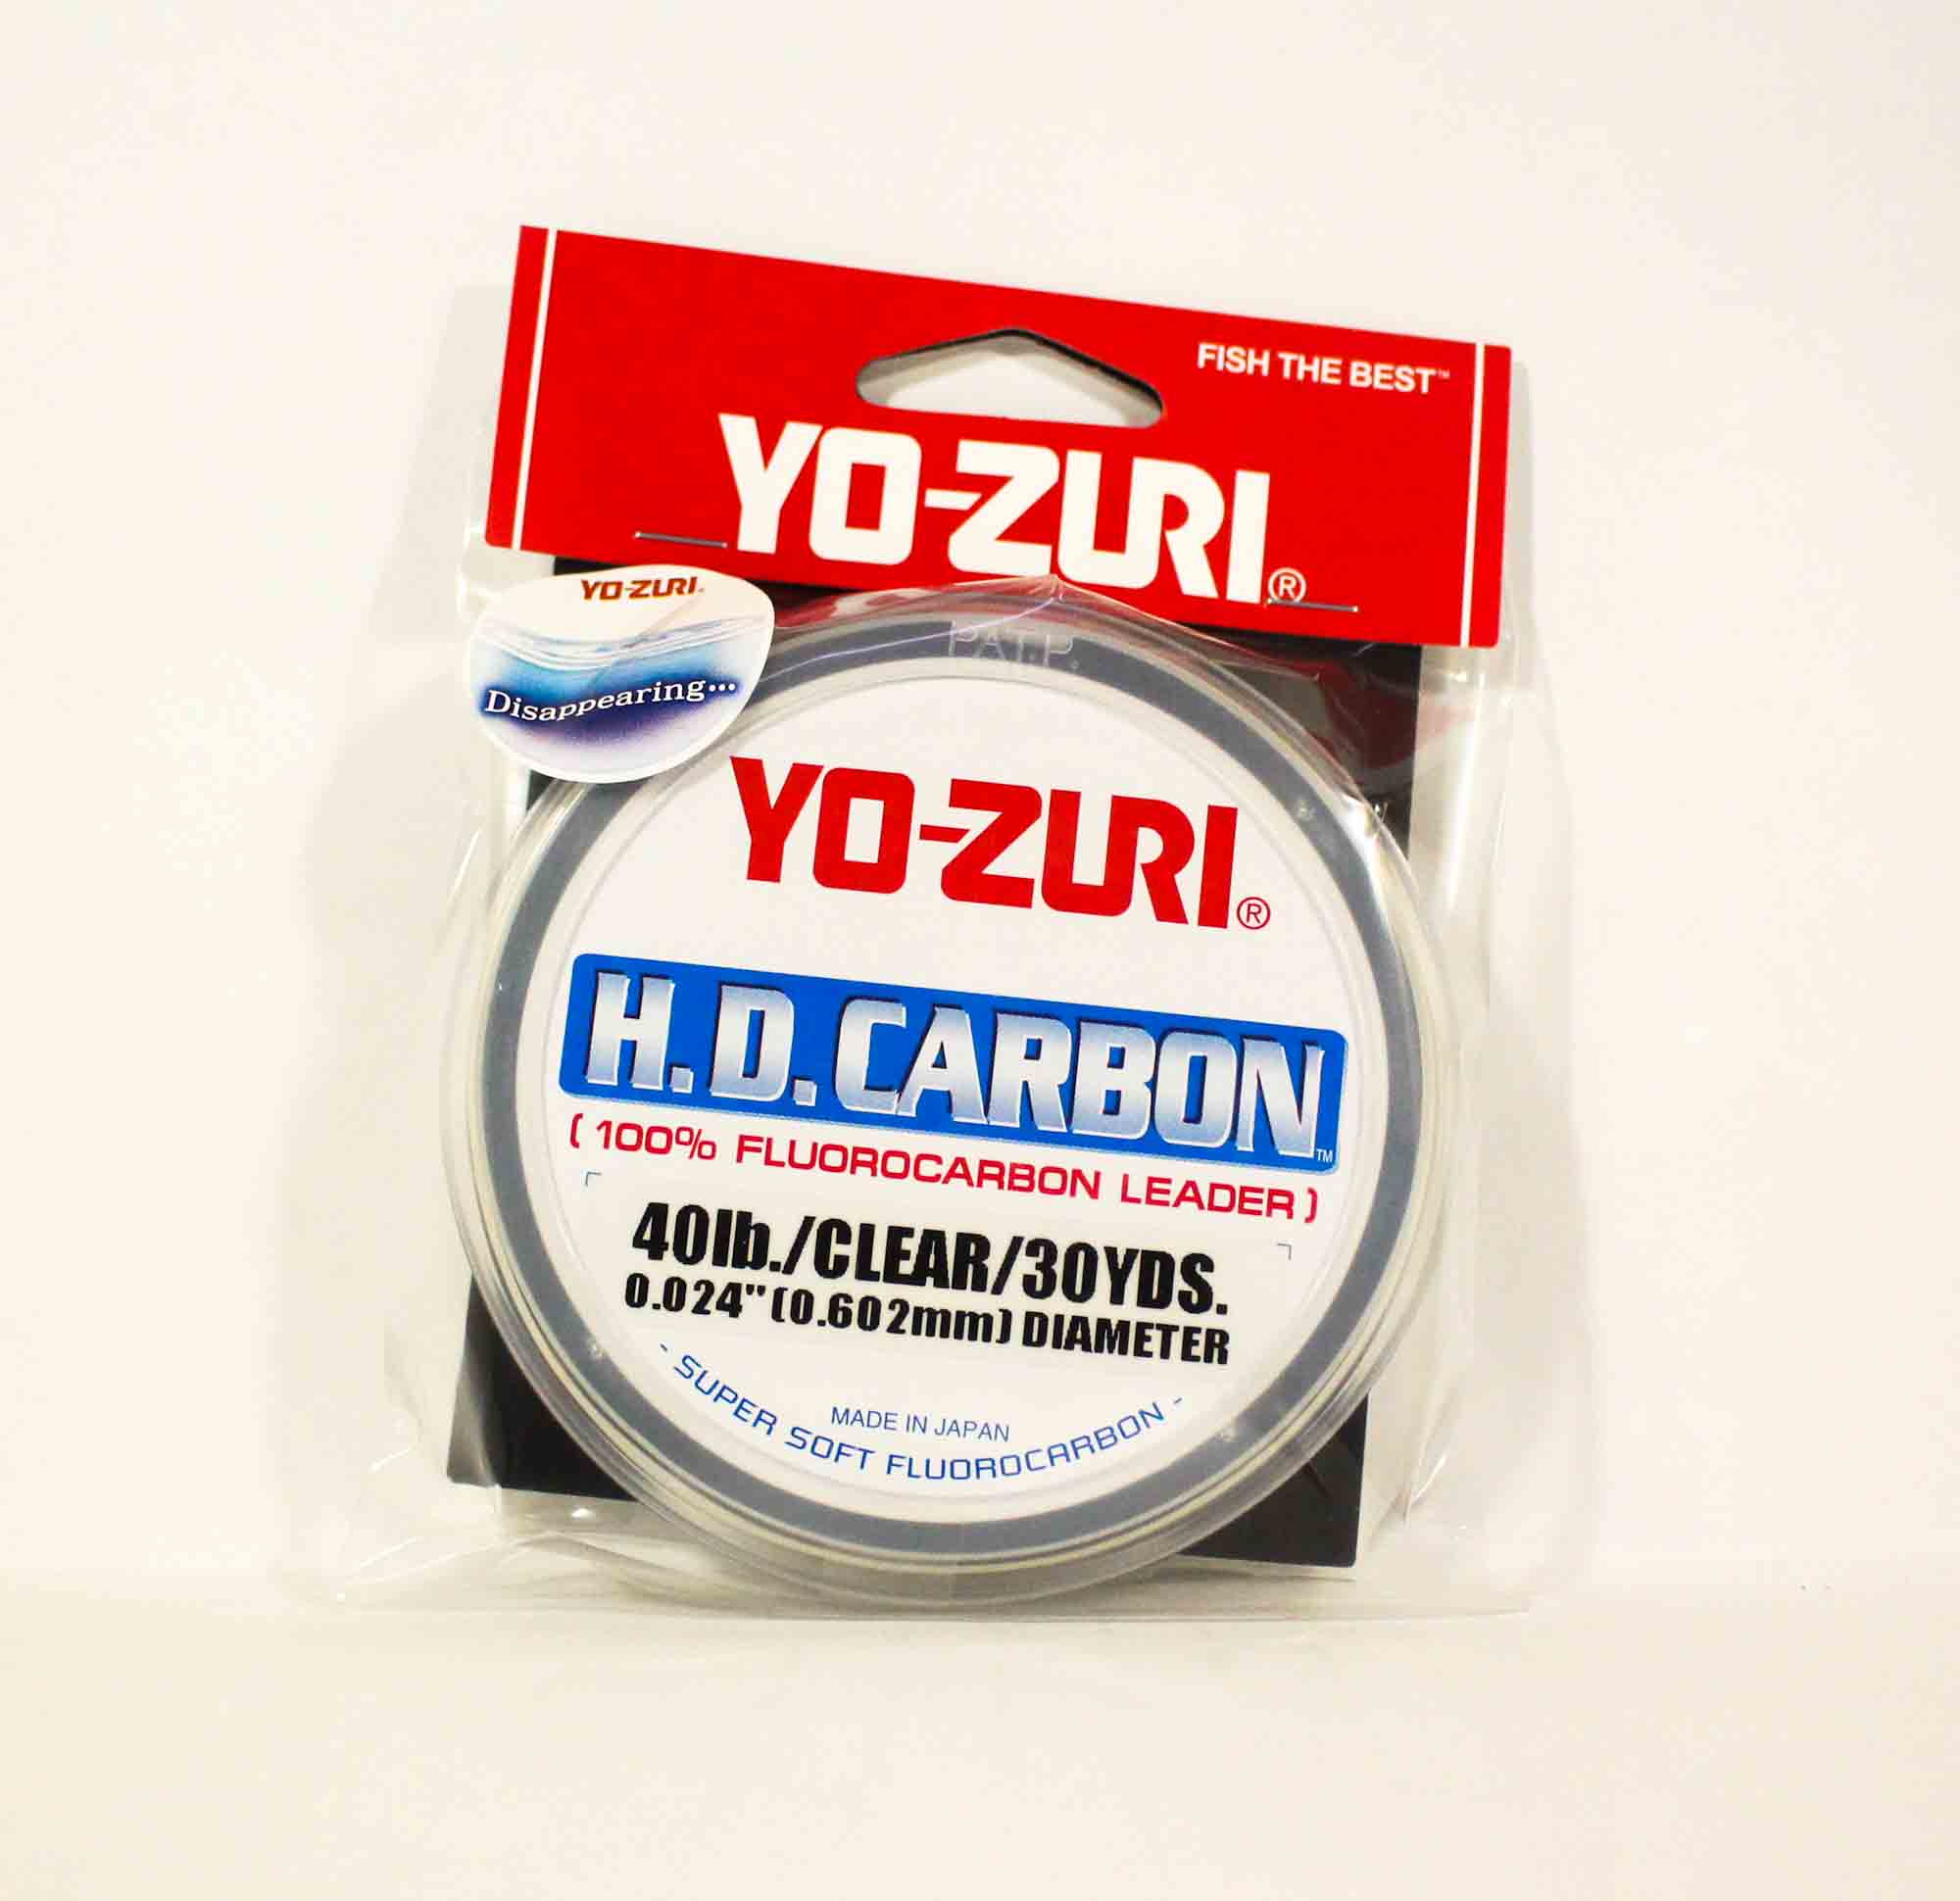 Yo Zuri Hardcore Fluorocarbon Leader 30yds 30lb 0.47mm R1254-NC 1088 